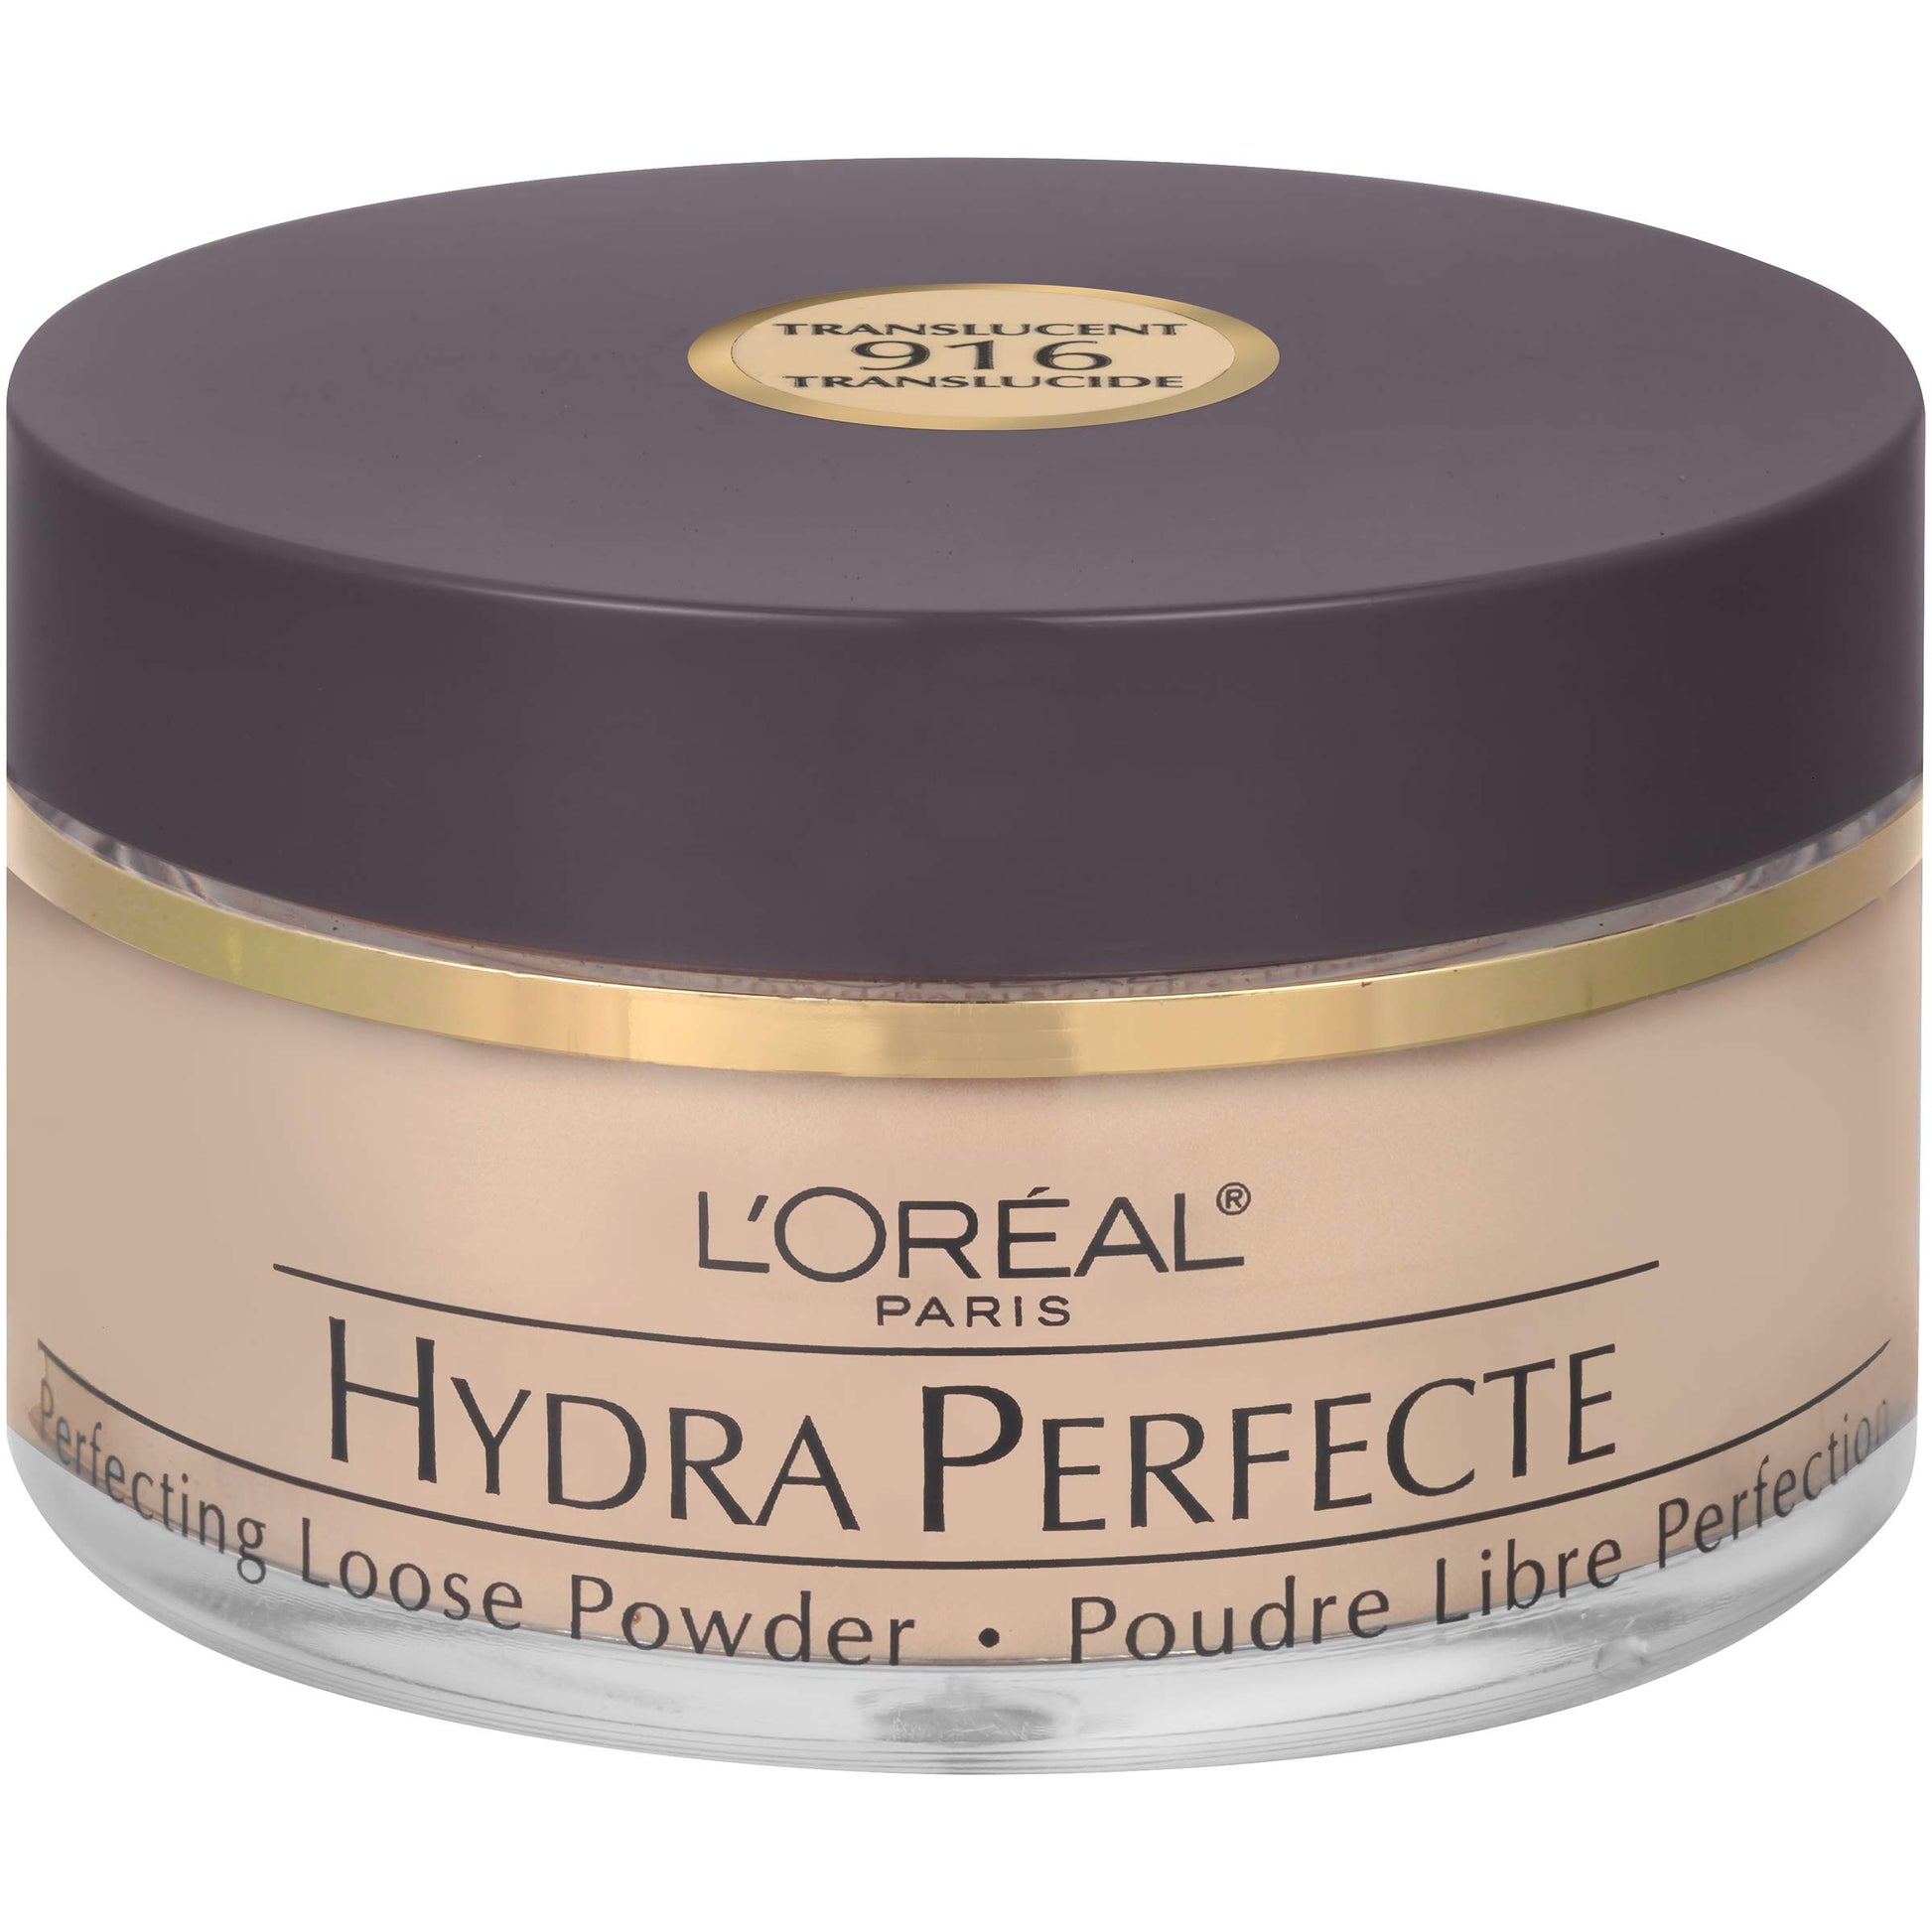 Buy L'Oreal Paris Hydra Perfecting Loose Powder - Medium 918 in Pakistan